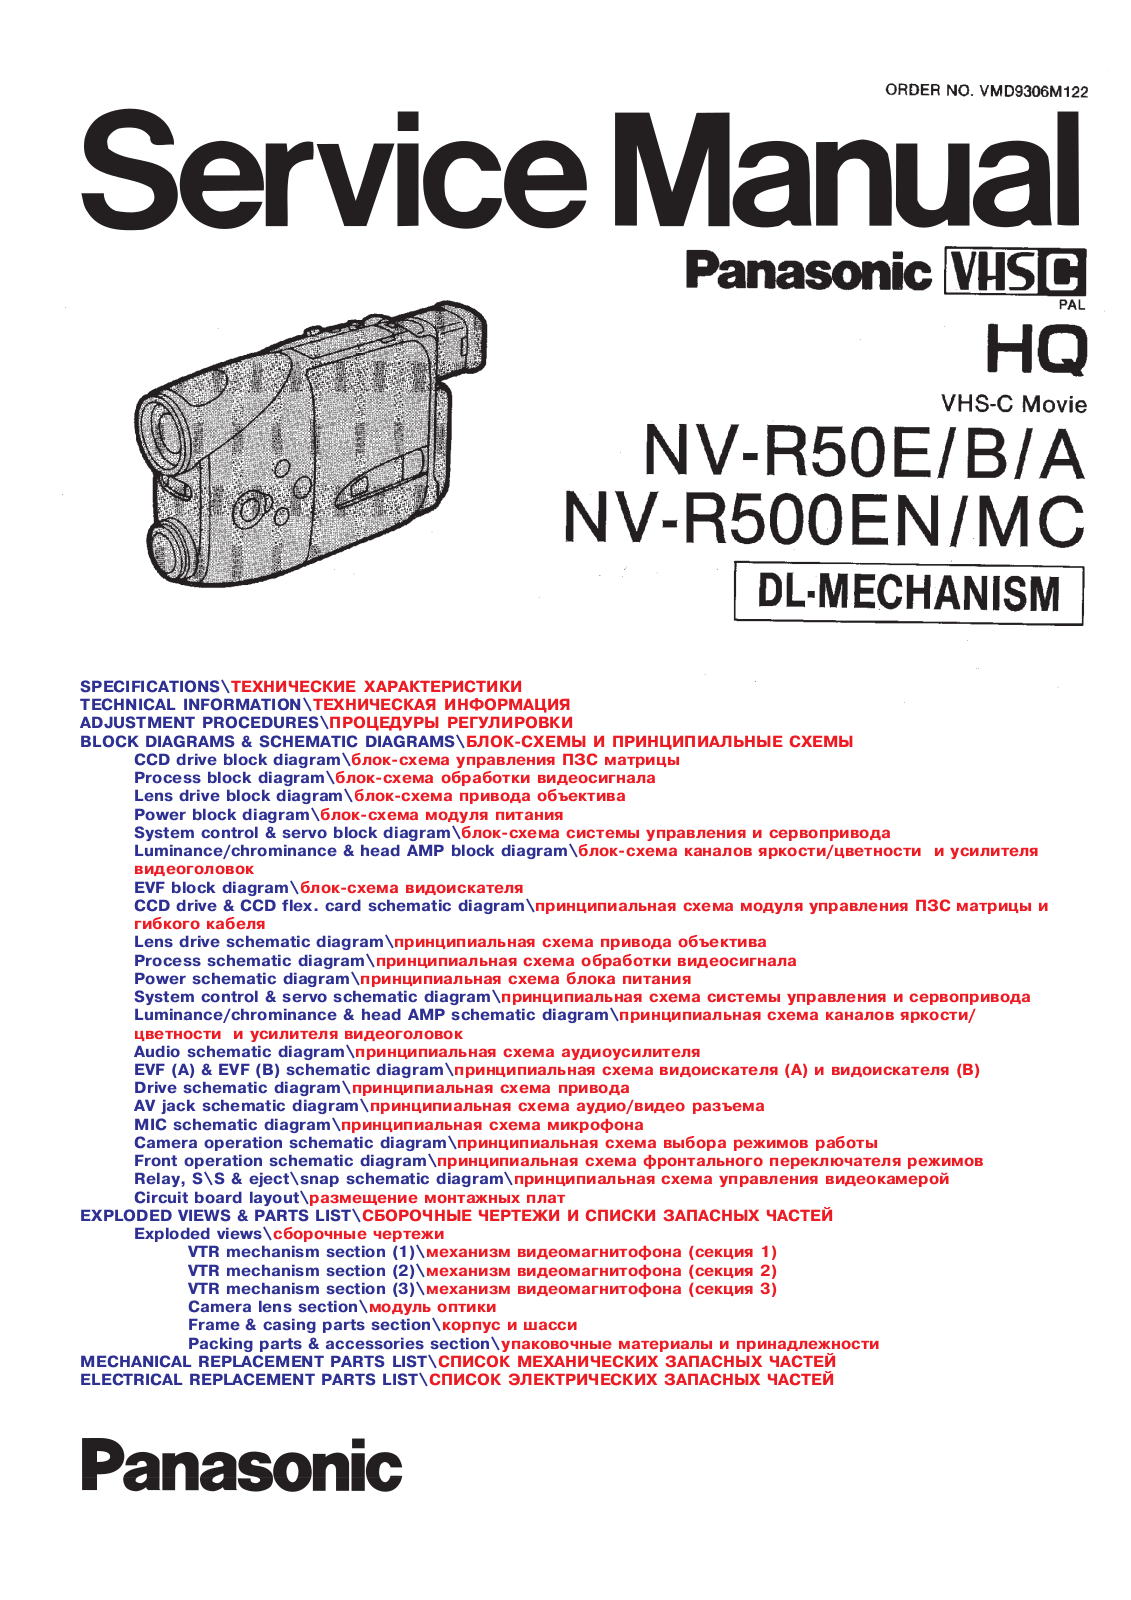 Panasonic NV-R50, NV-R500 SERVICE MANUAL